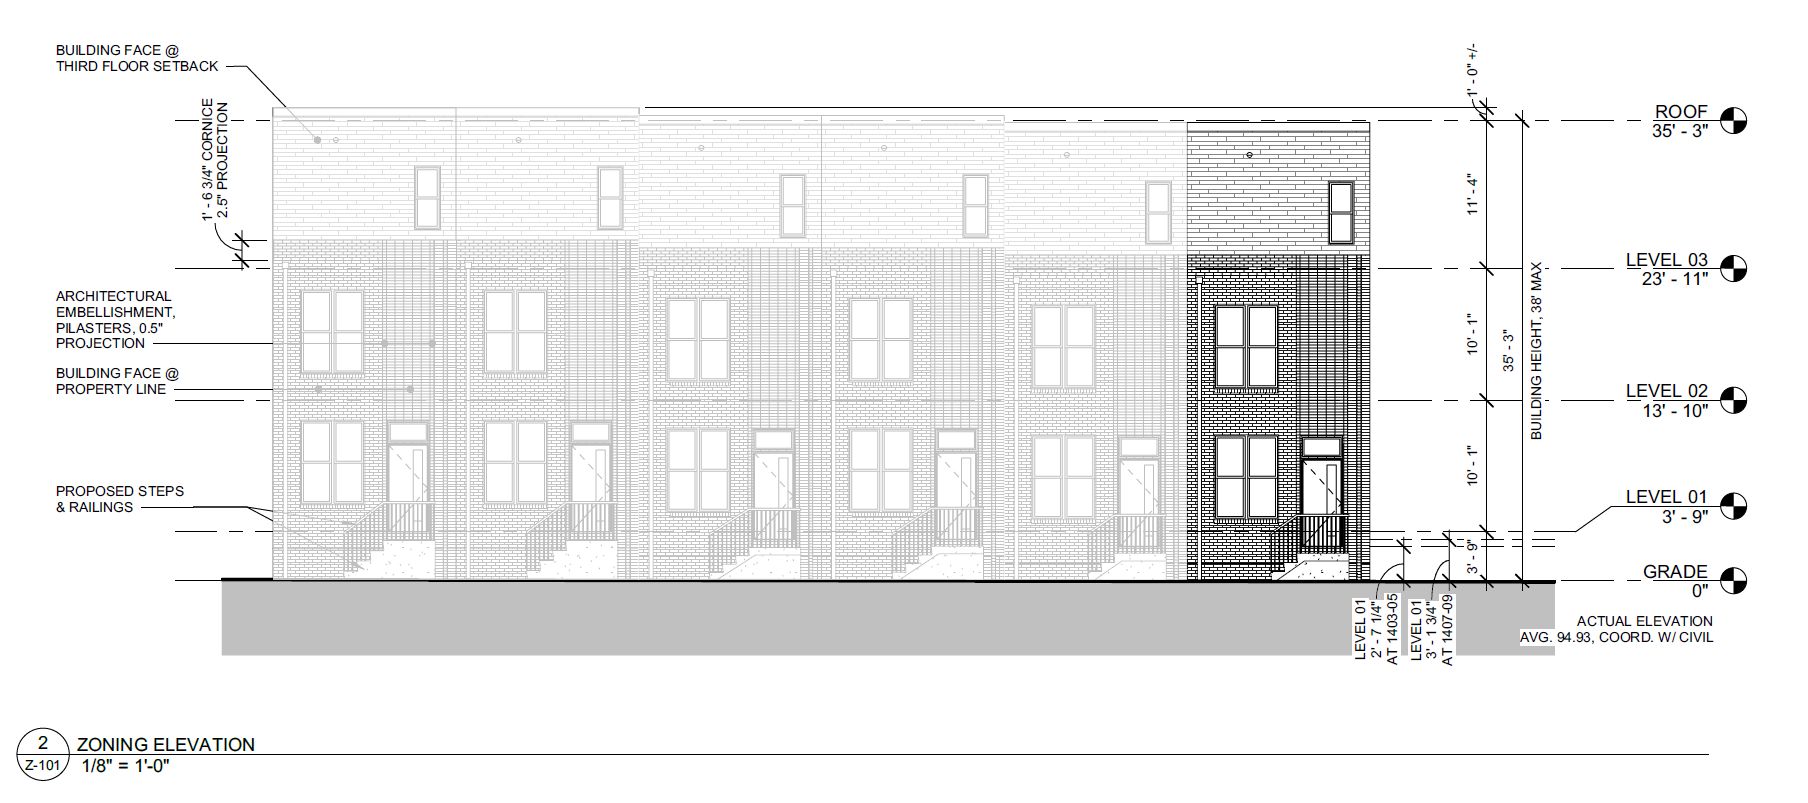 1403-13 North Marston Street. Building elevation, with 1403 North Marston Street highlighted. Credit: Moto Designshop via the City of Philadelphia